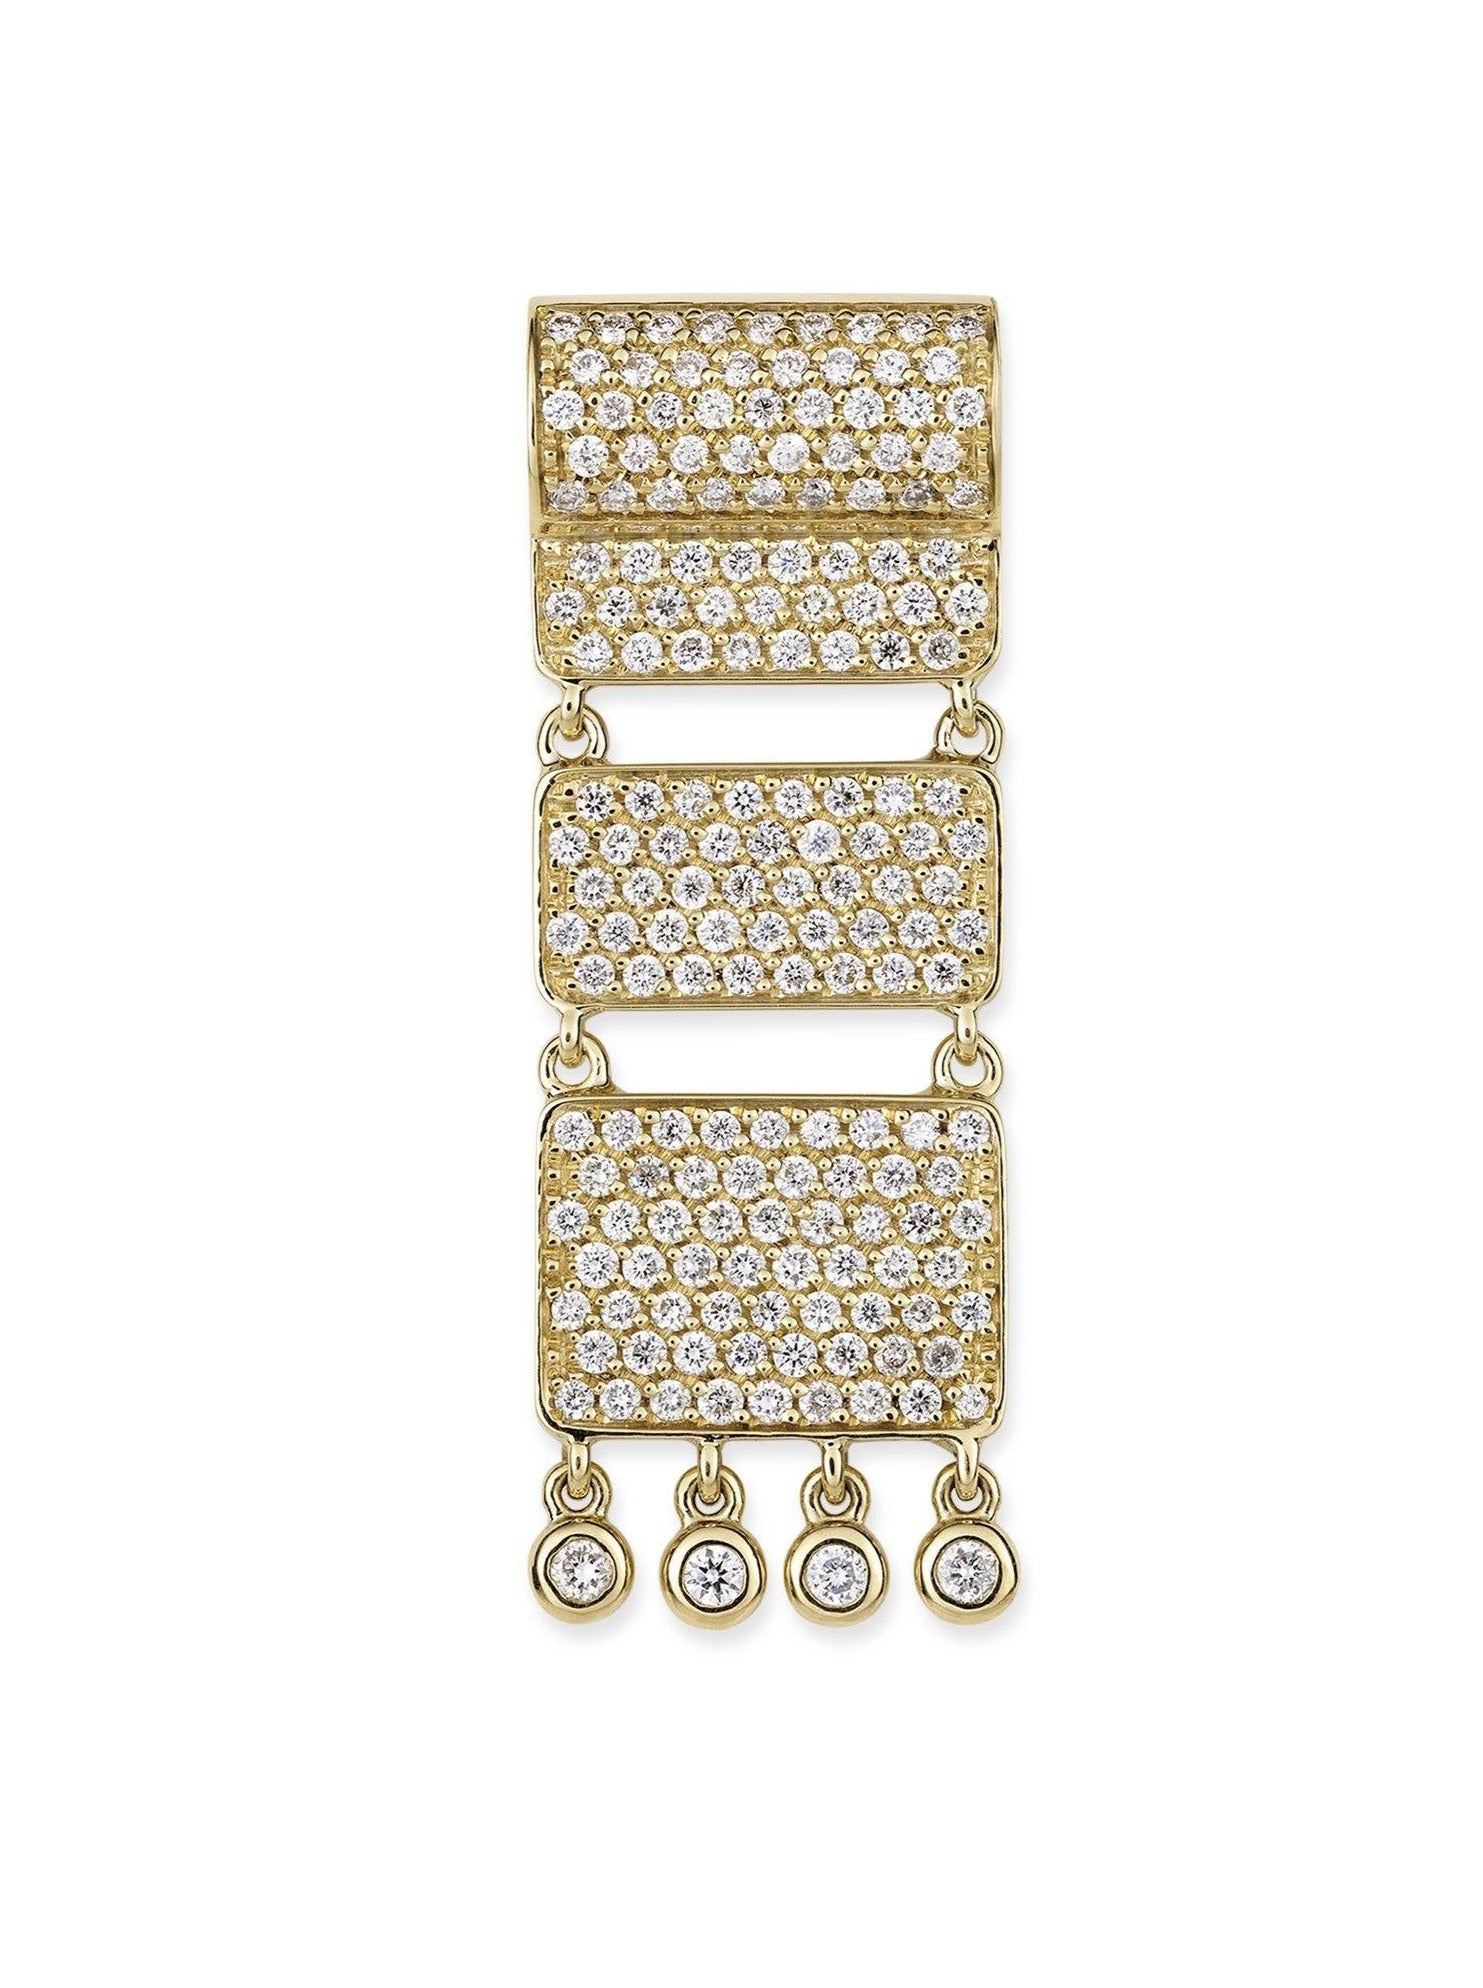 Carpet - Pendant in 18 karat gold with diamonds